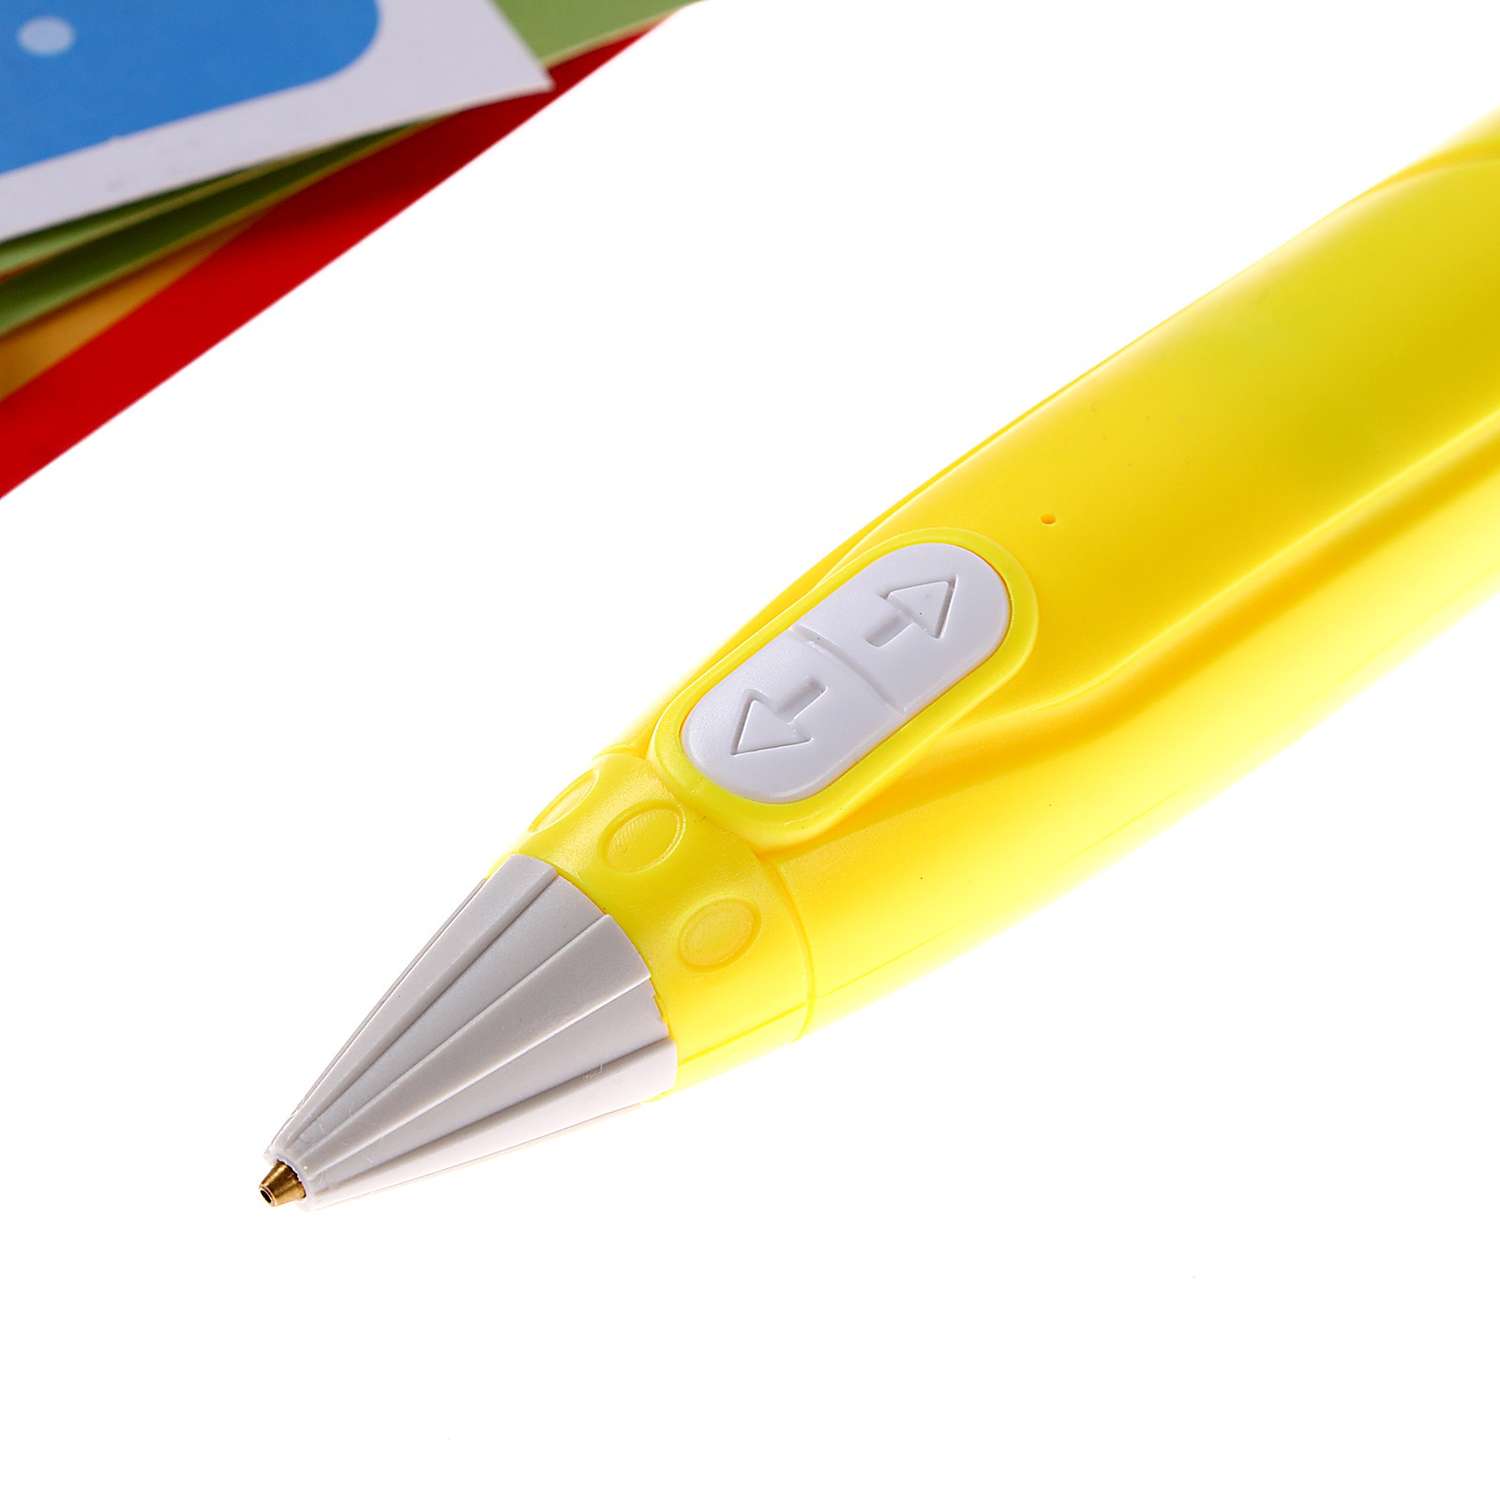 3D ручка Sima-Land «Новый год» набор PСL пластика. мод. PN007. цвет жёлтый - фото 4